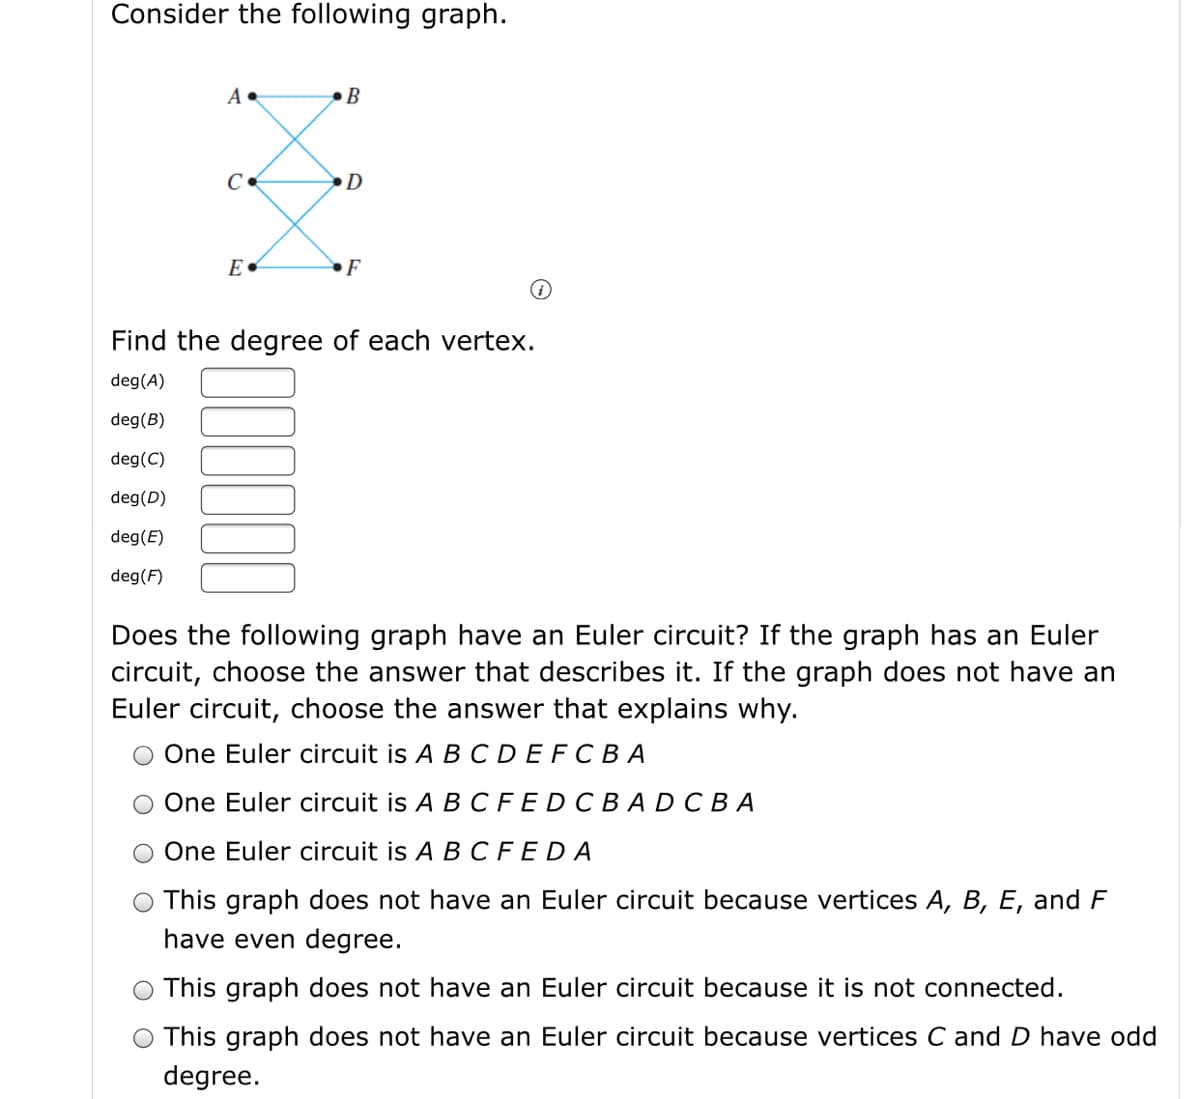 Consider the following graph.
•B
D
•F
Find the degree of each vertex.
deg(A)
deg(B)
deg(C)
deg(D)
deg(E)
deg(F)
Does the following graph have an Euler circuit? If the graph has an Euler
circuit, choose the answer that describes it. If the graph does not have an
Euler circuit, choose the answer that explains why.
One Euler circuit is A B CDEFCBA
One Euler circuit is A BCFEDCB ADCBA
One Euler circuit is A B CFEDA
O This graph does not have an Euler circuit because vertices A, B, E, and F
have even degree.
This graph does not have an Euler circuit because it is not connected.
O This graph does not have an Euler circuit because vertices C and D have odd
degree.
